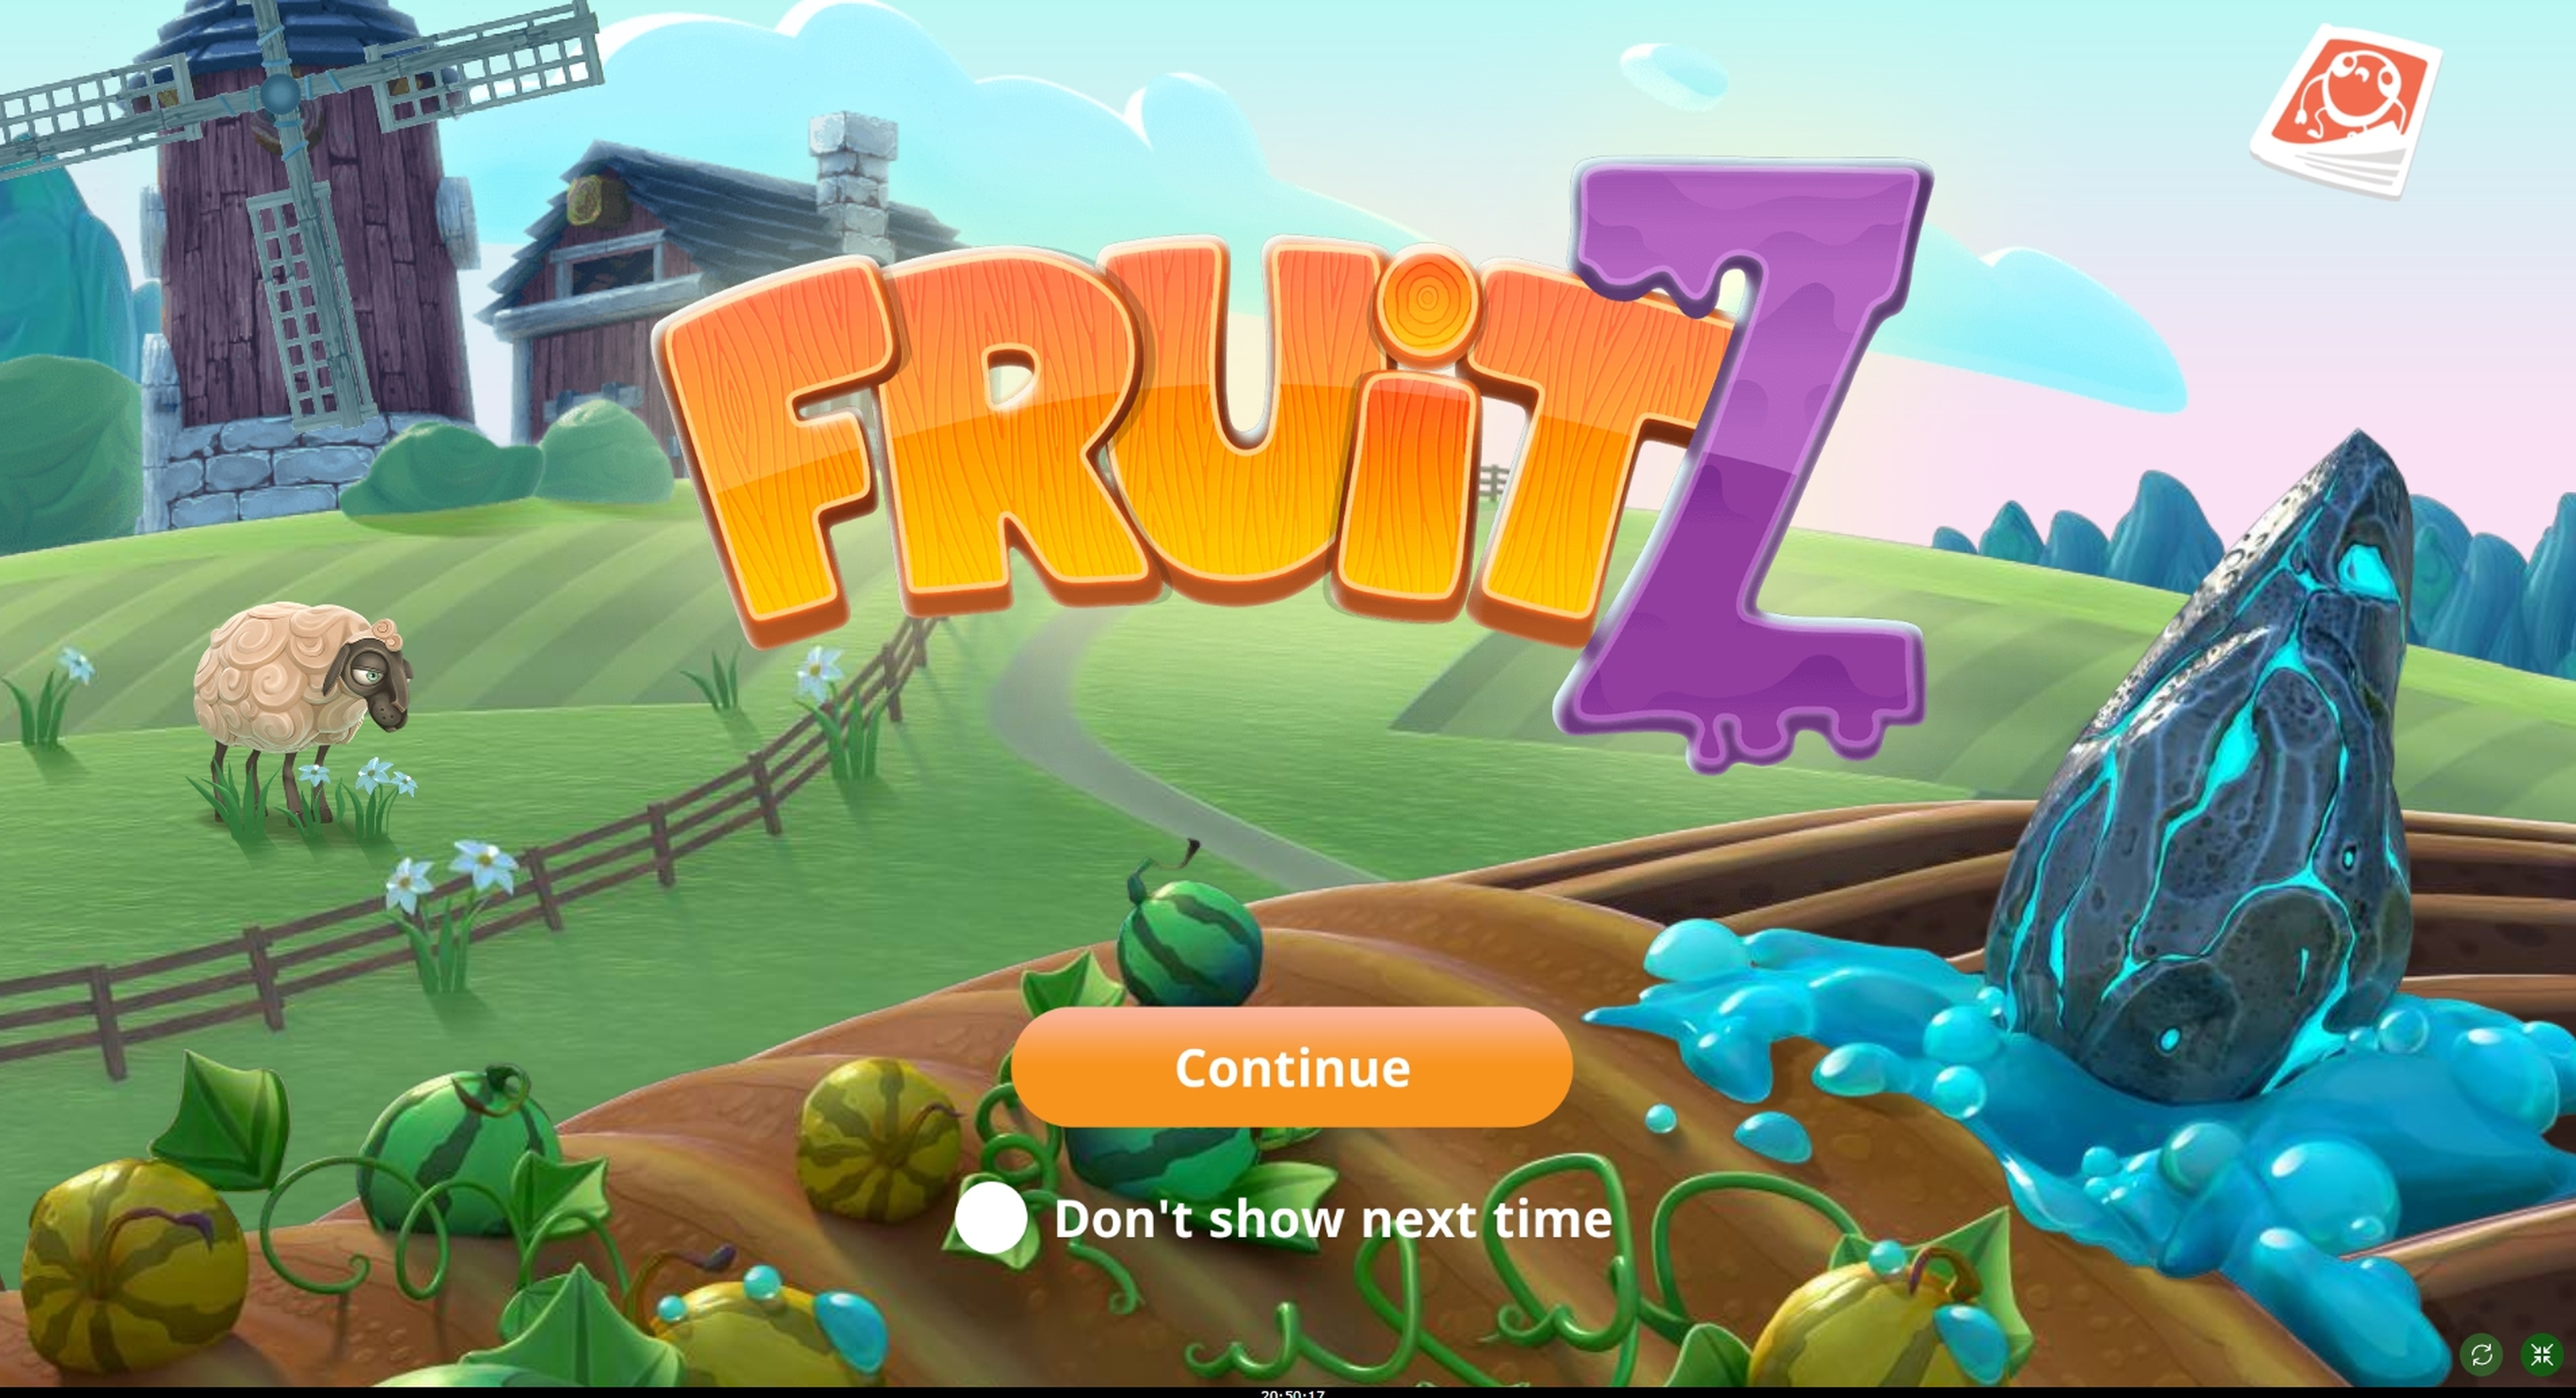 Play Fruitz Free Casino Slot Game by Foxium